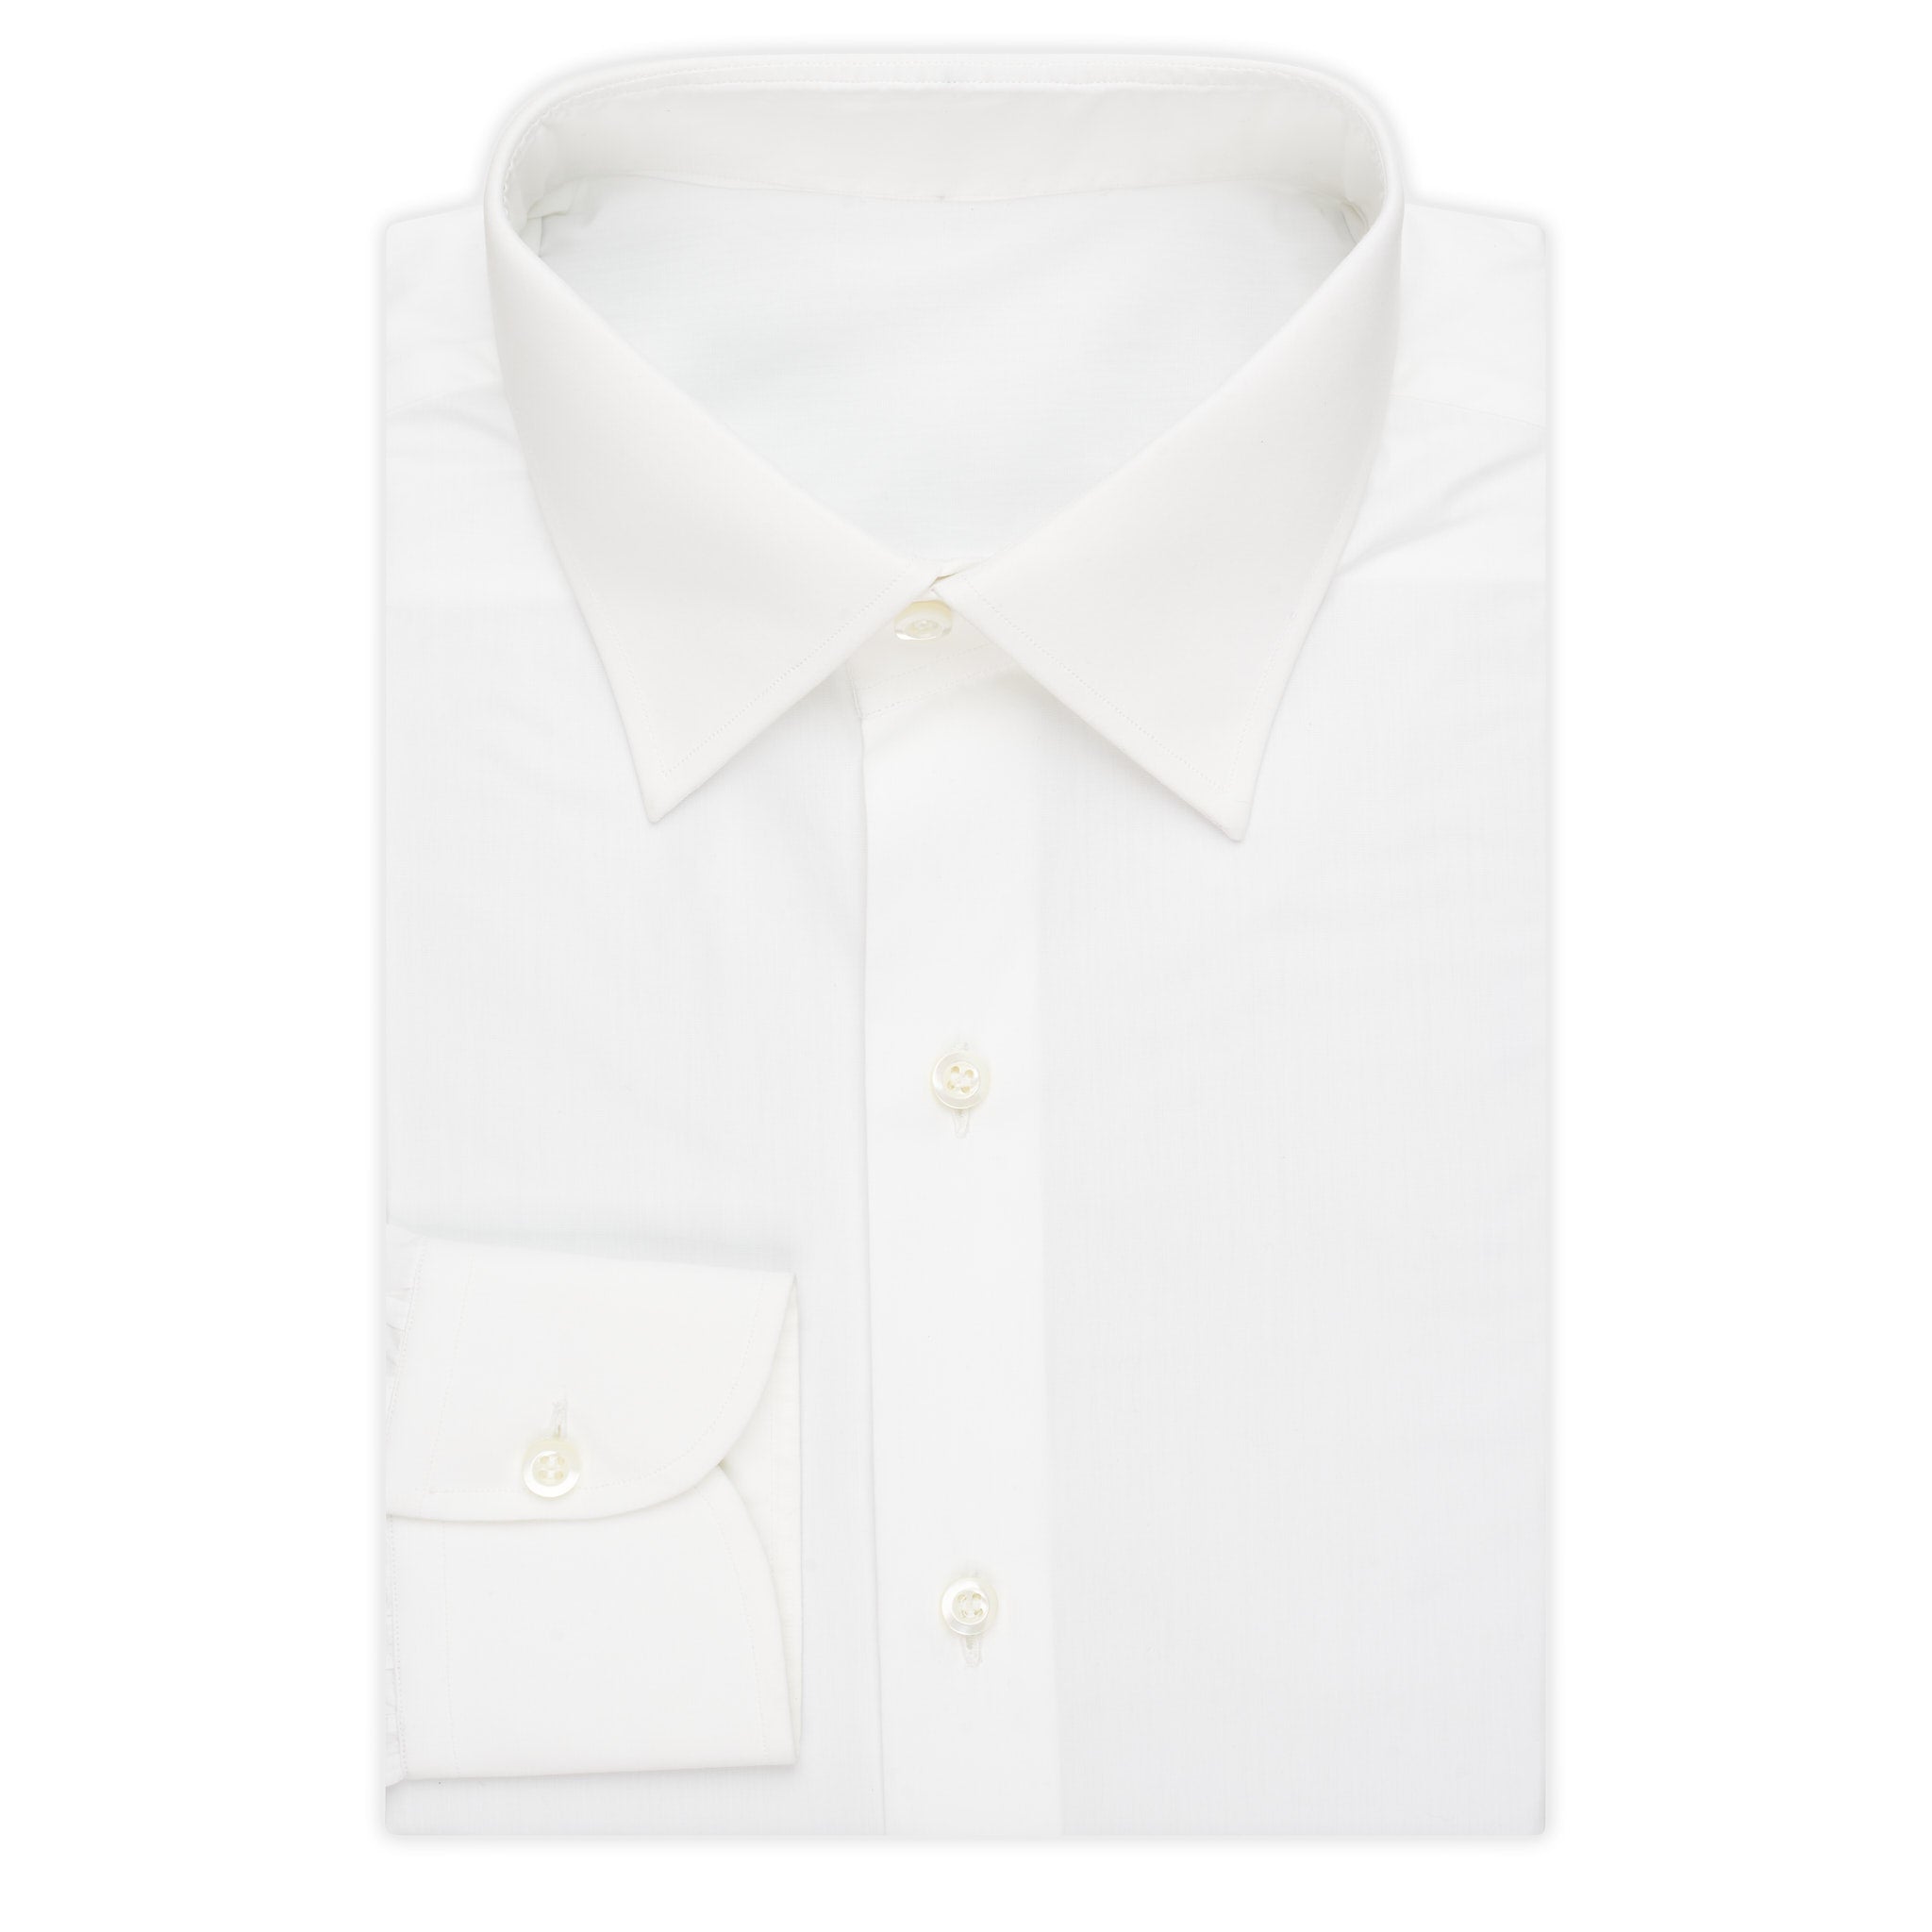 BESPOKE ATHENS Handmade White Poplin Cotton Dress Shirt EU 43 NEW US 17 BESPOKE ATHENS